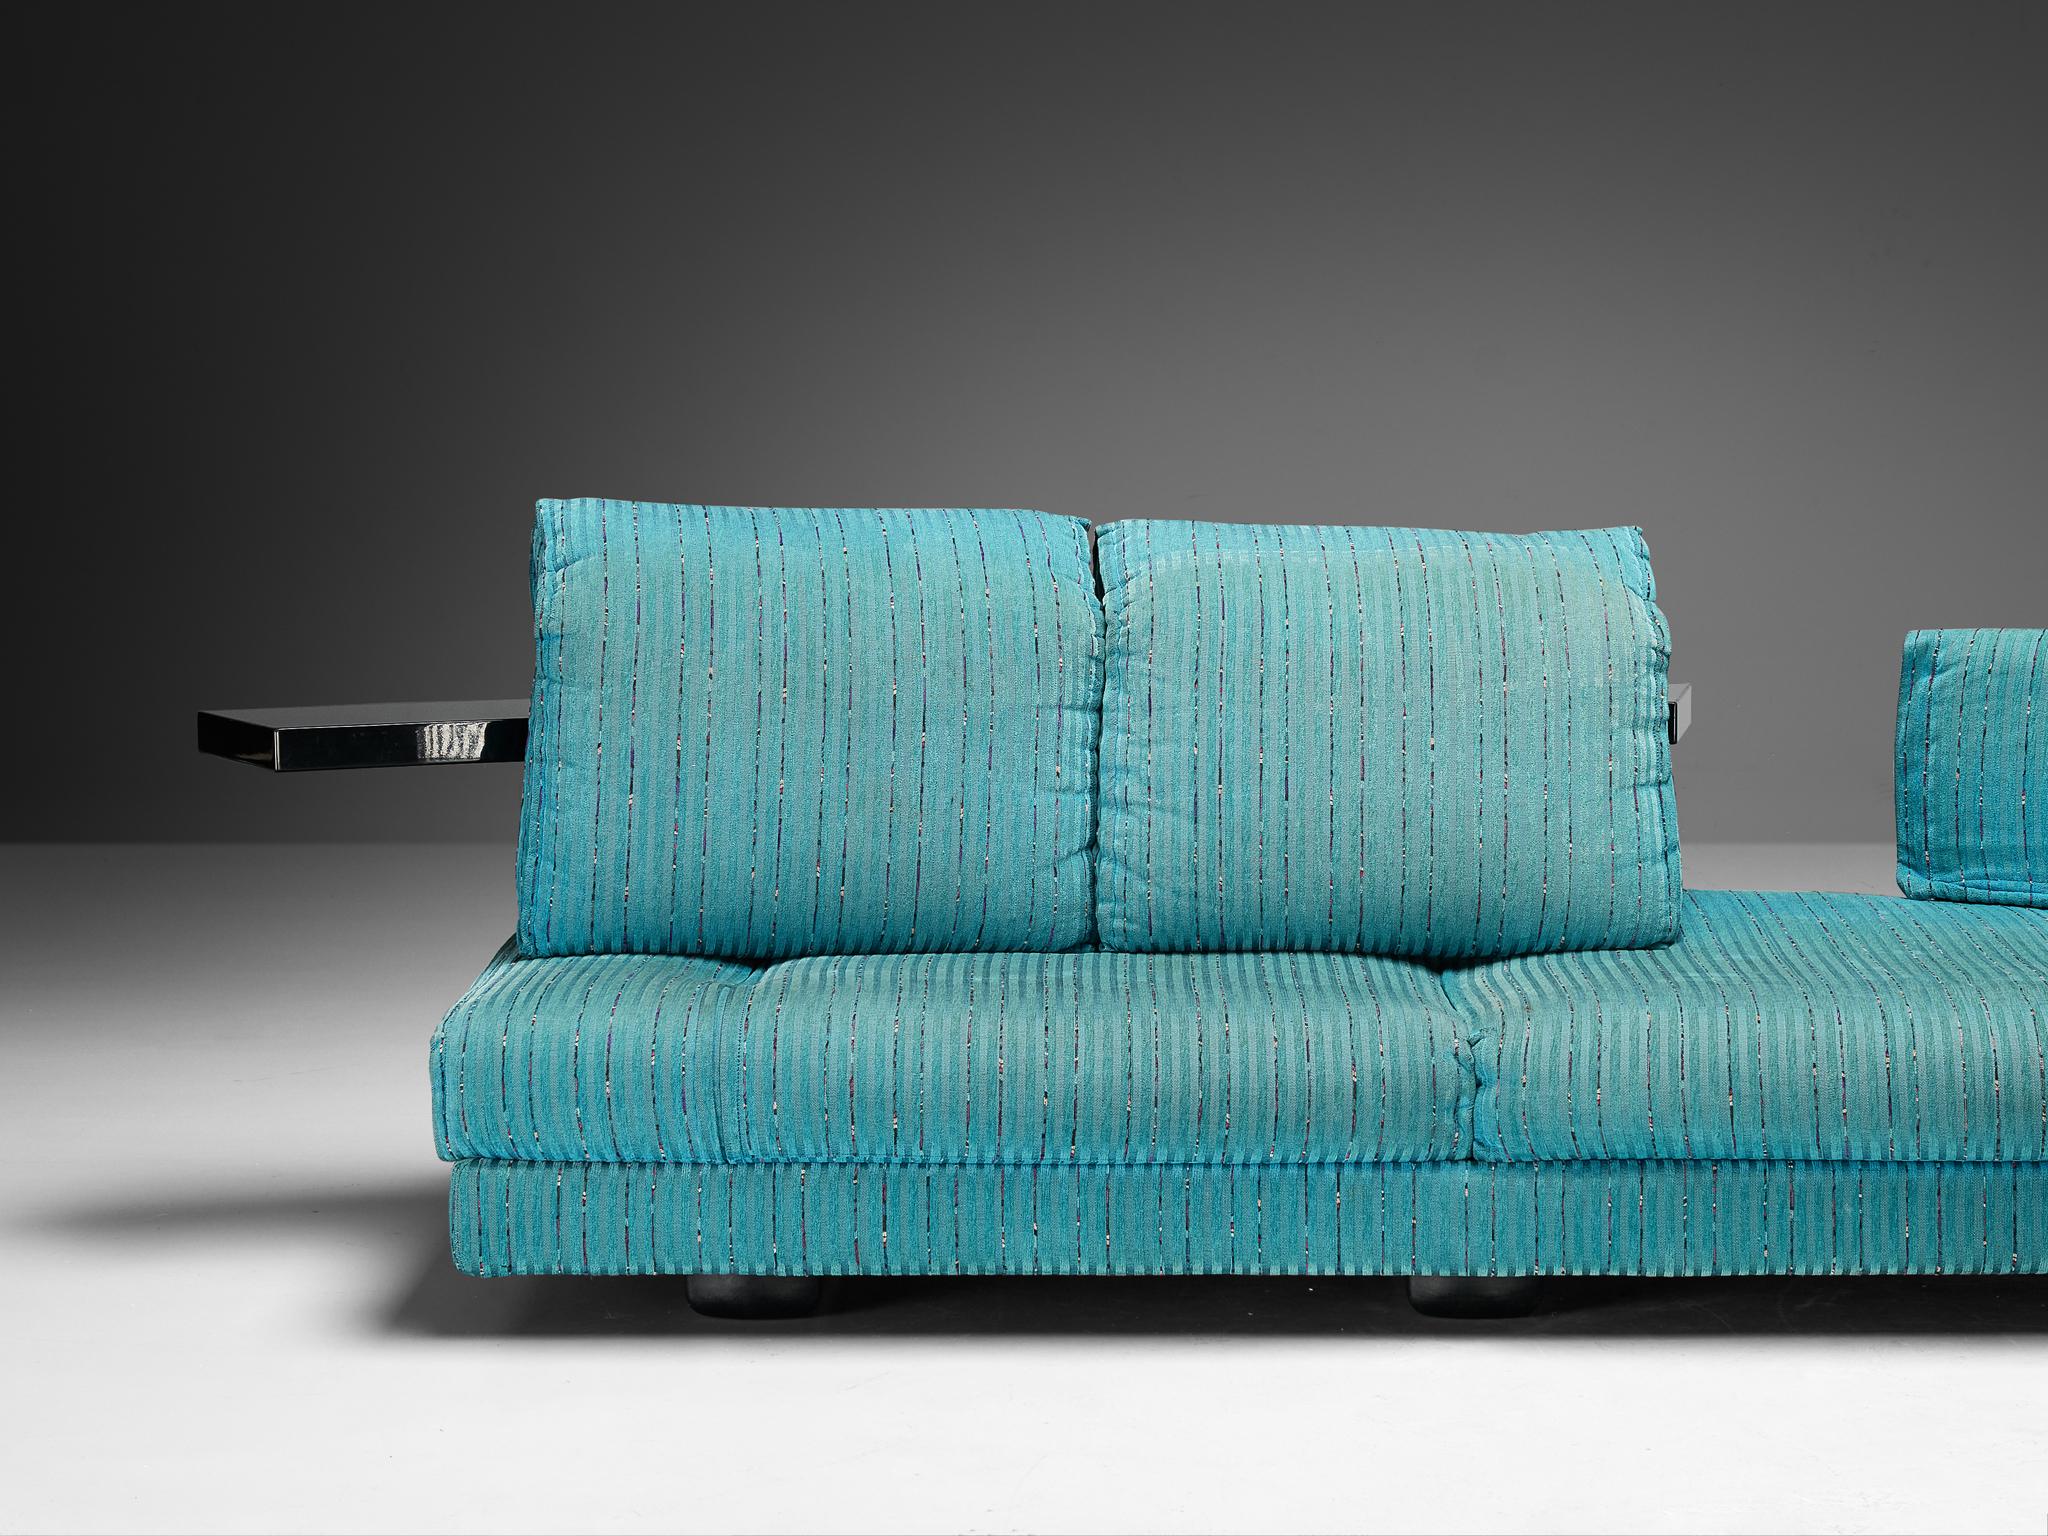 Mauro Lipparini for Saporiti 'Avedon' Sofa in Turquoise Upholstery